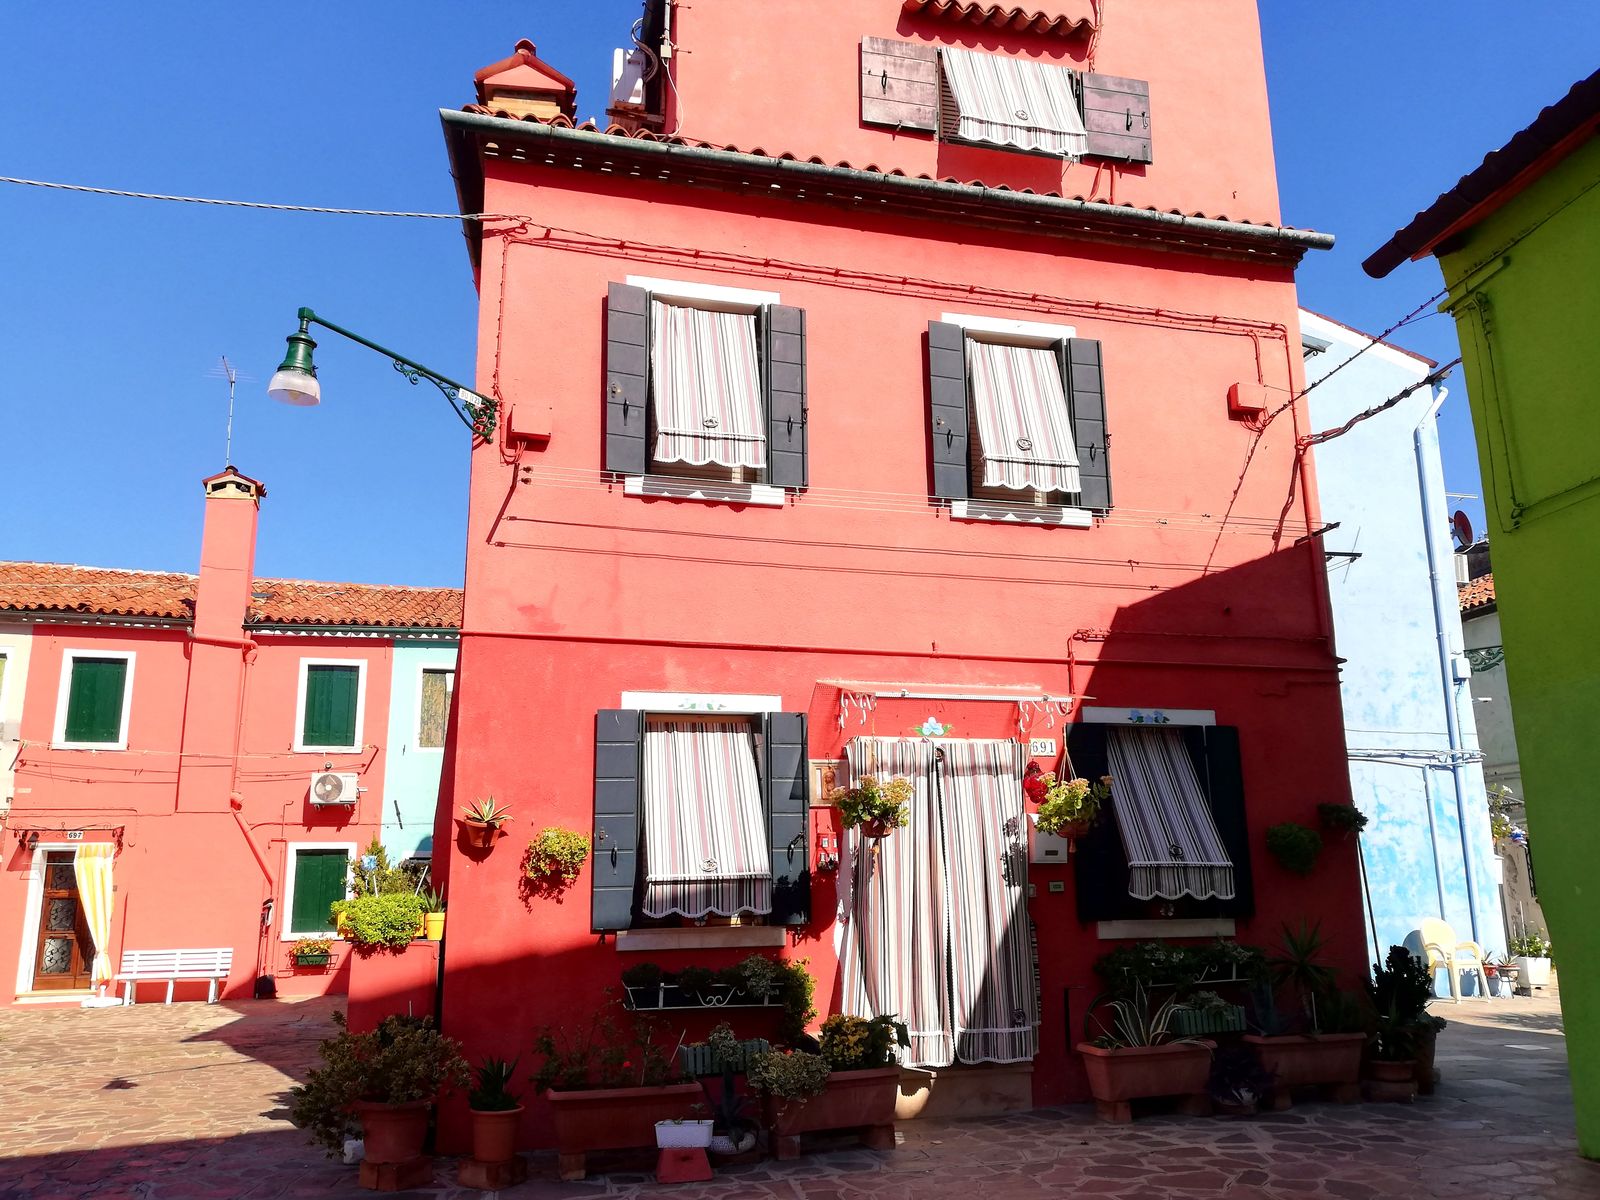 Visiter l'île de Burano maison rose